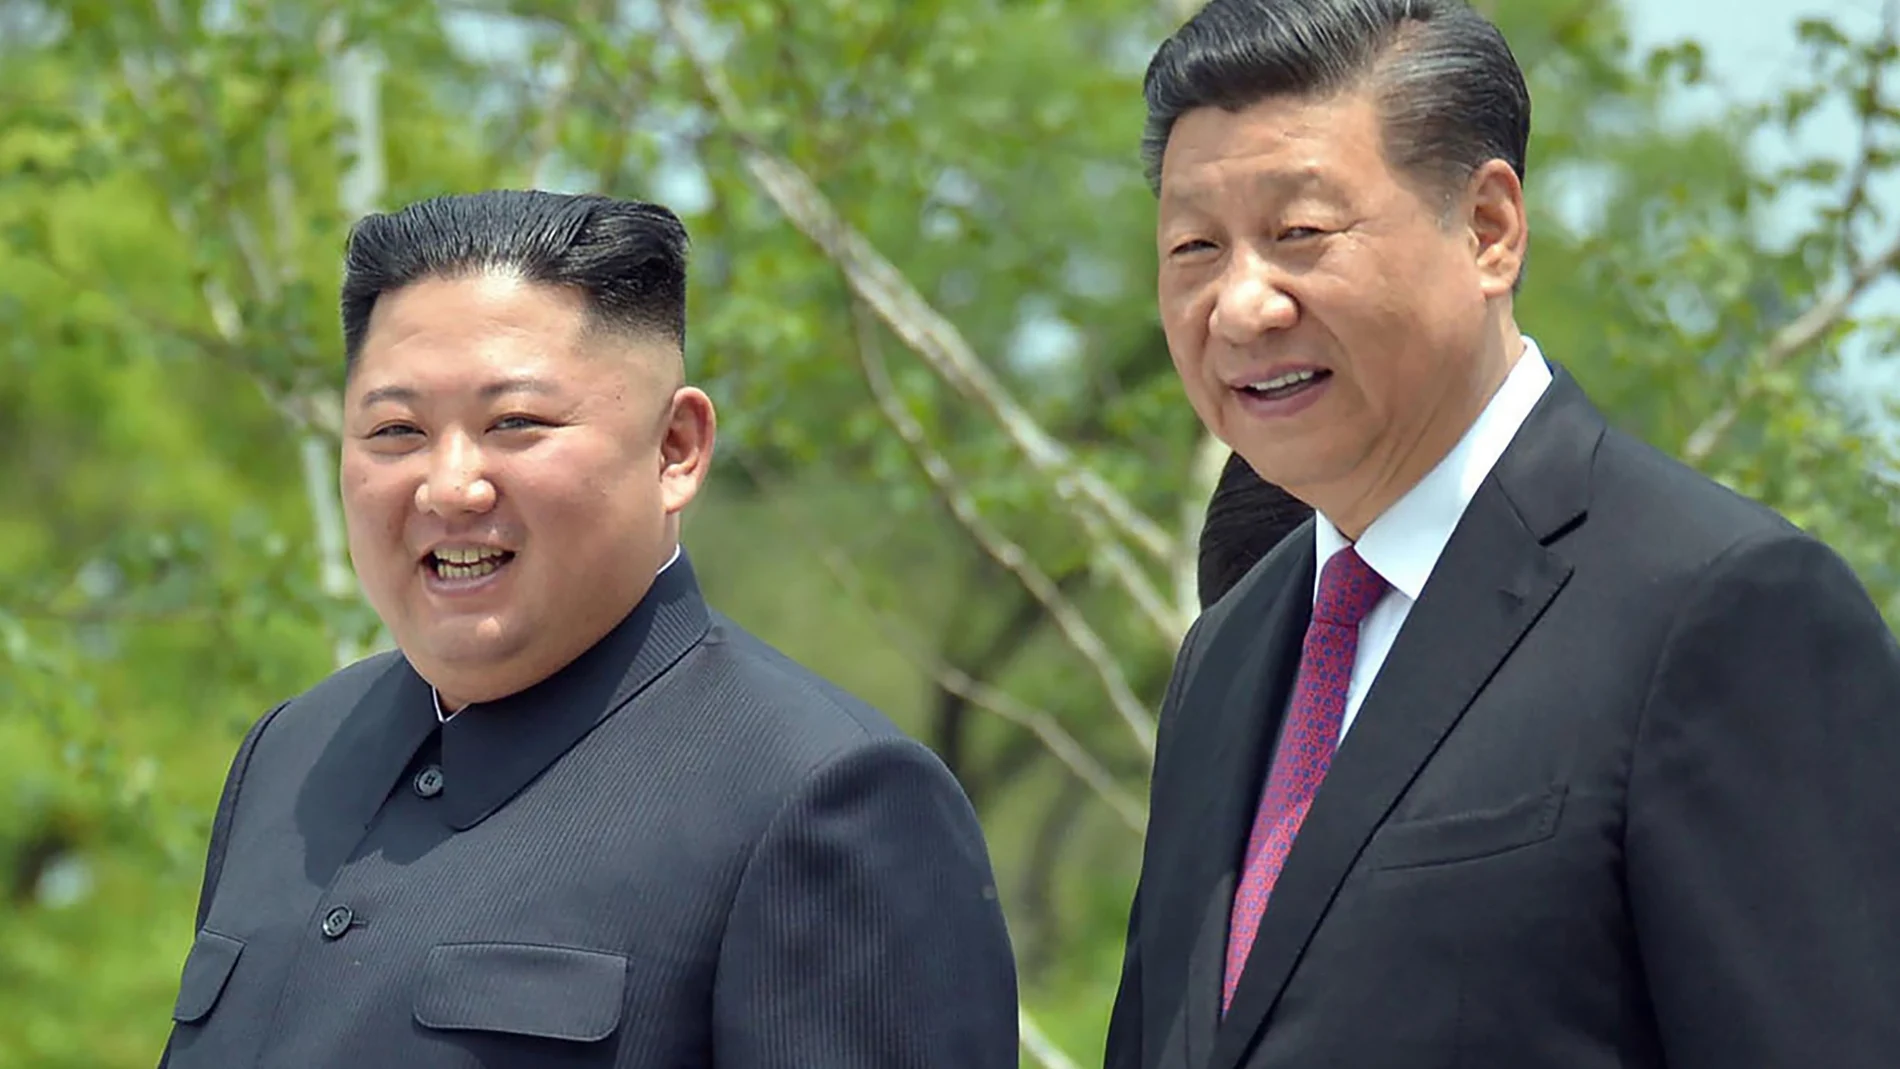 El dictador norcoreano, Kim Jong Un, junto al líder chino, Xi Jinping, en una imagen de 2019